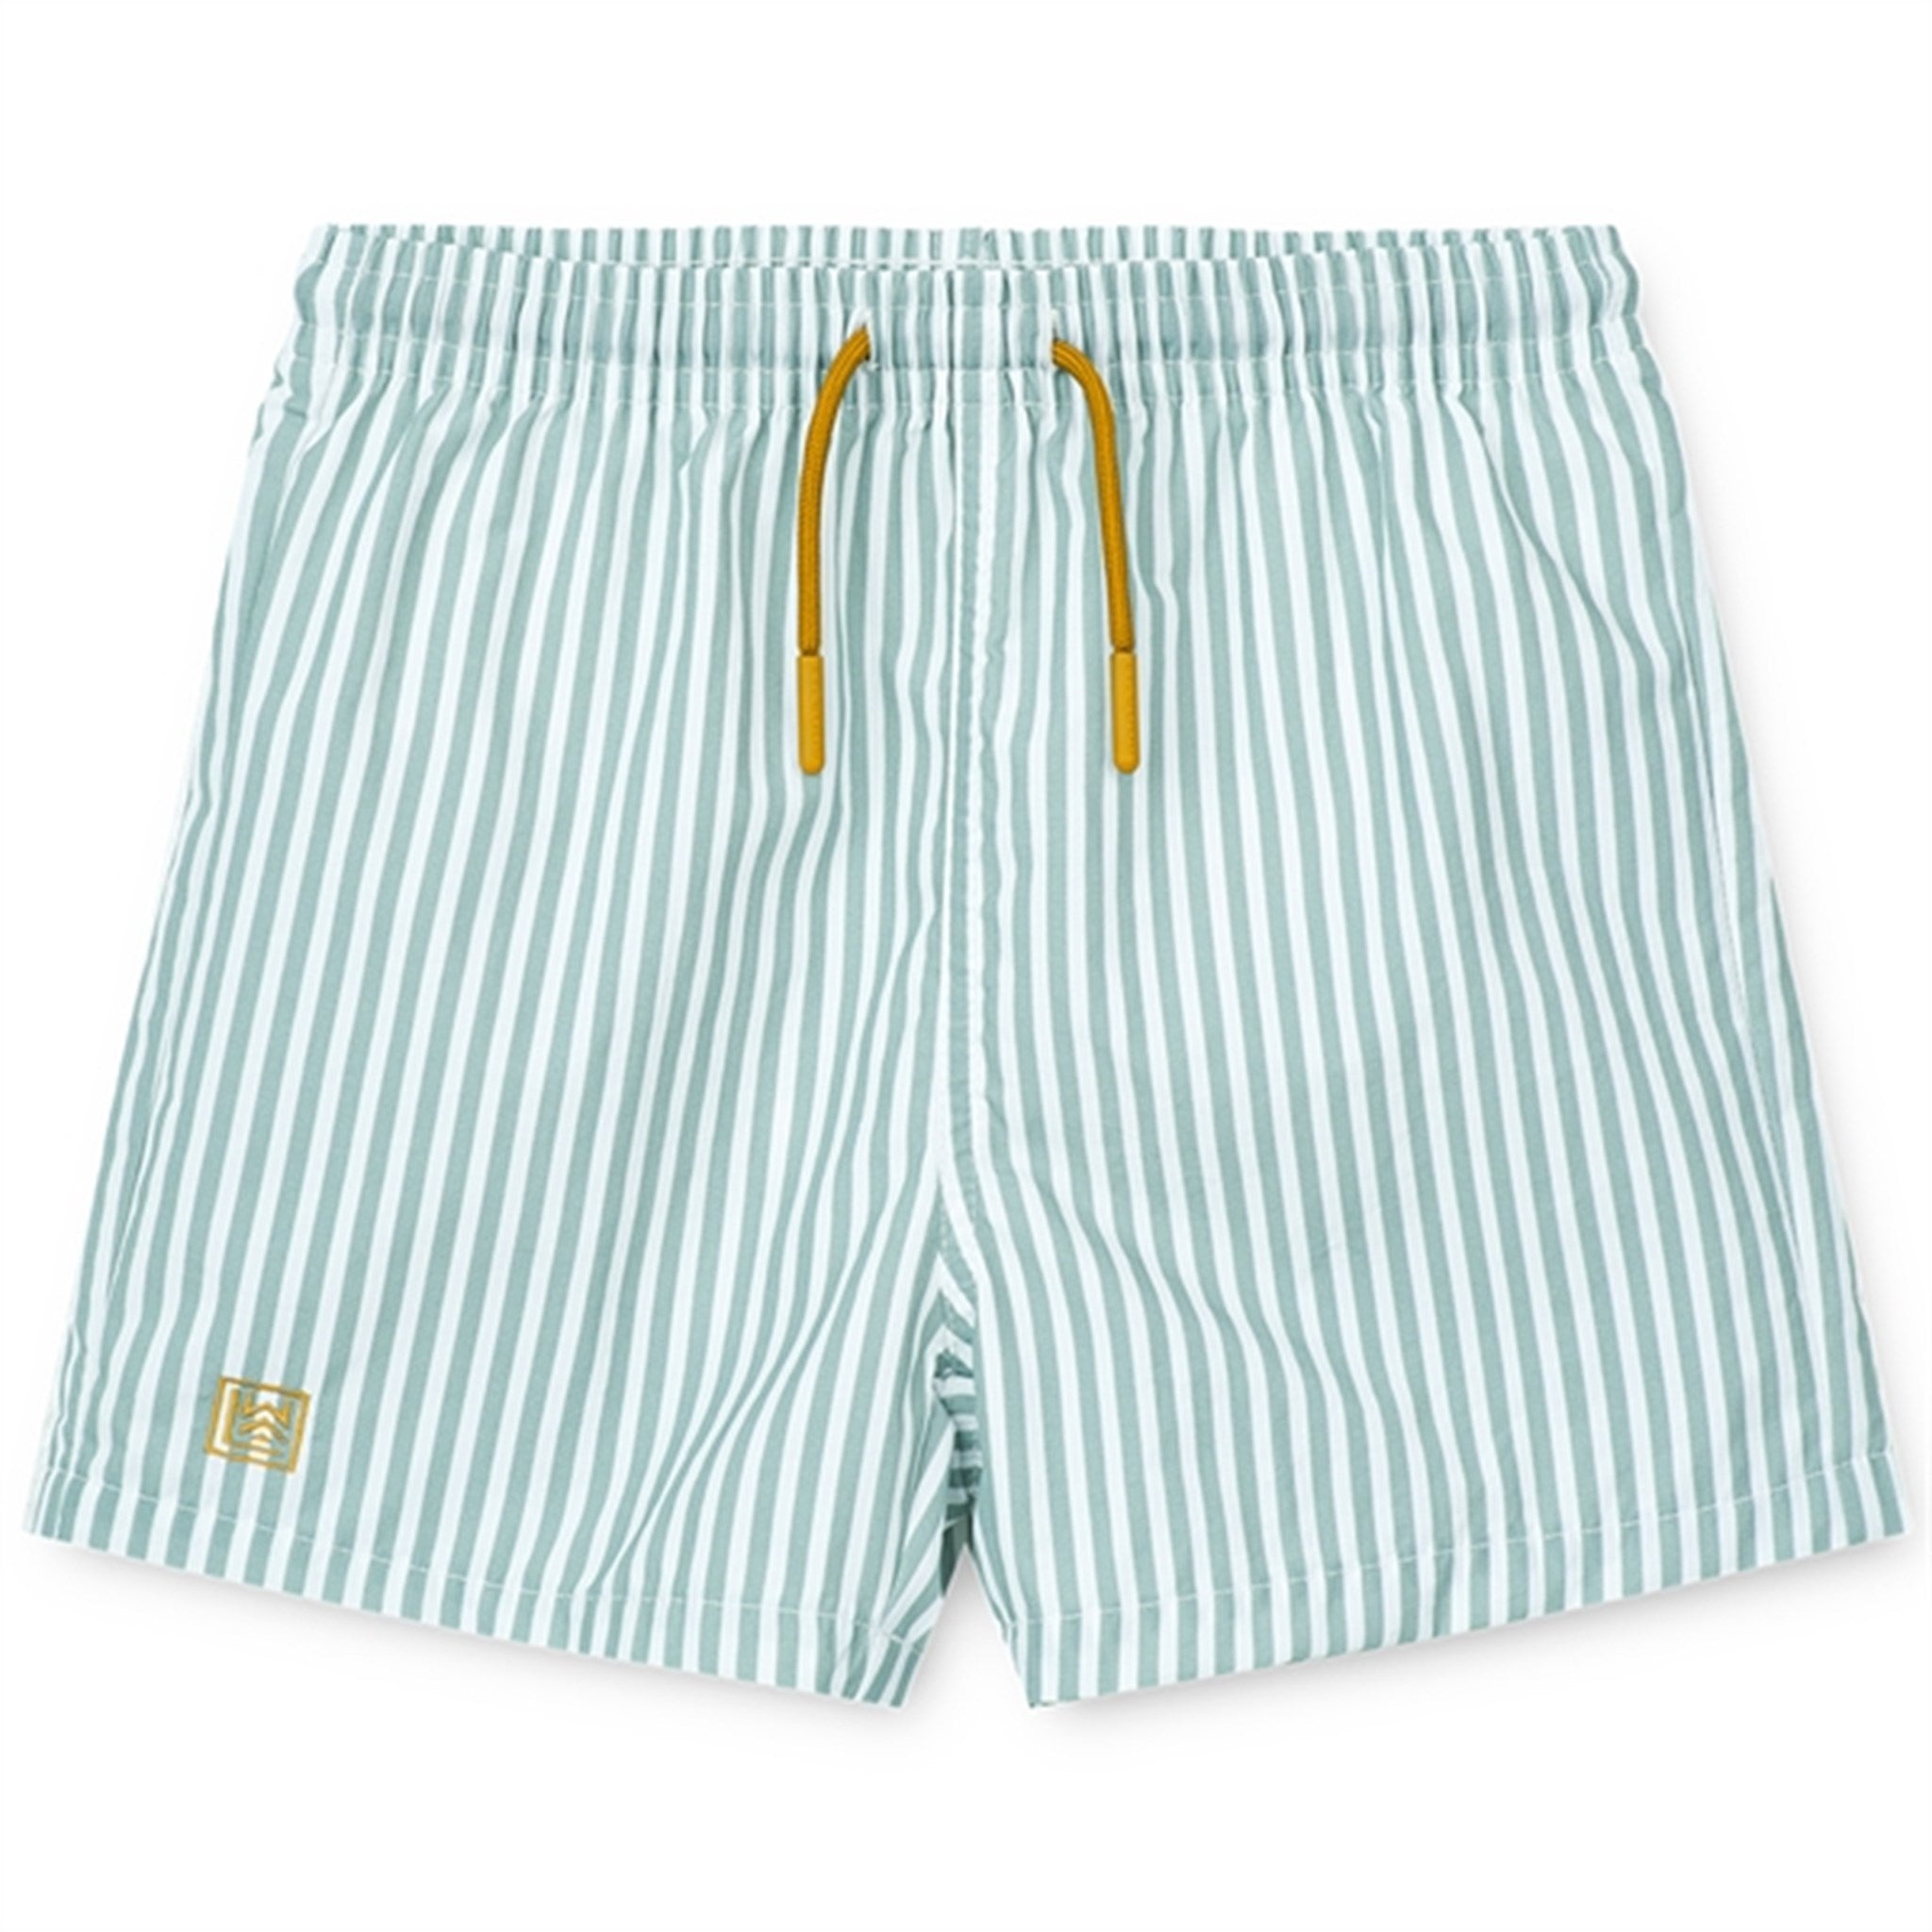 Liewood Duke Board Shorts Stripe Sea Blue/White 2